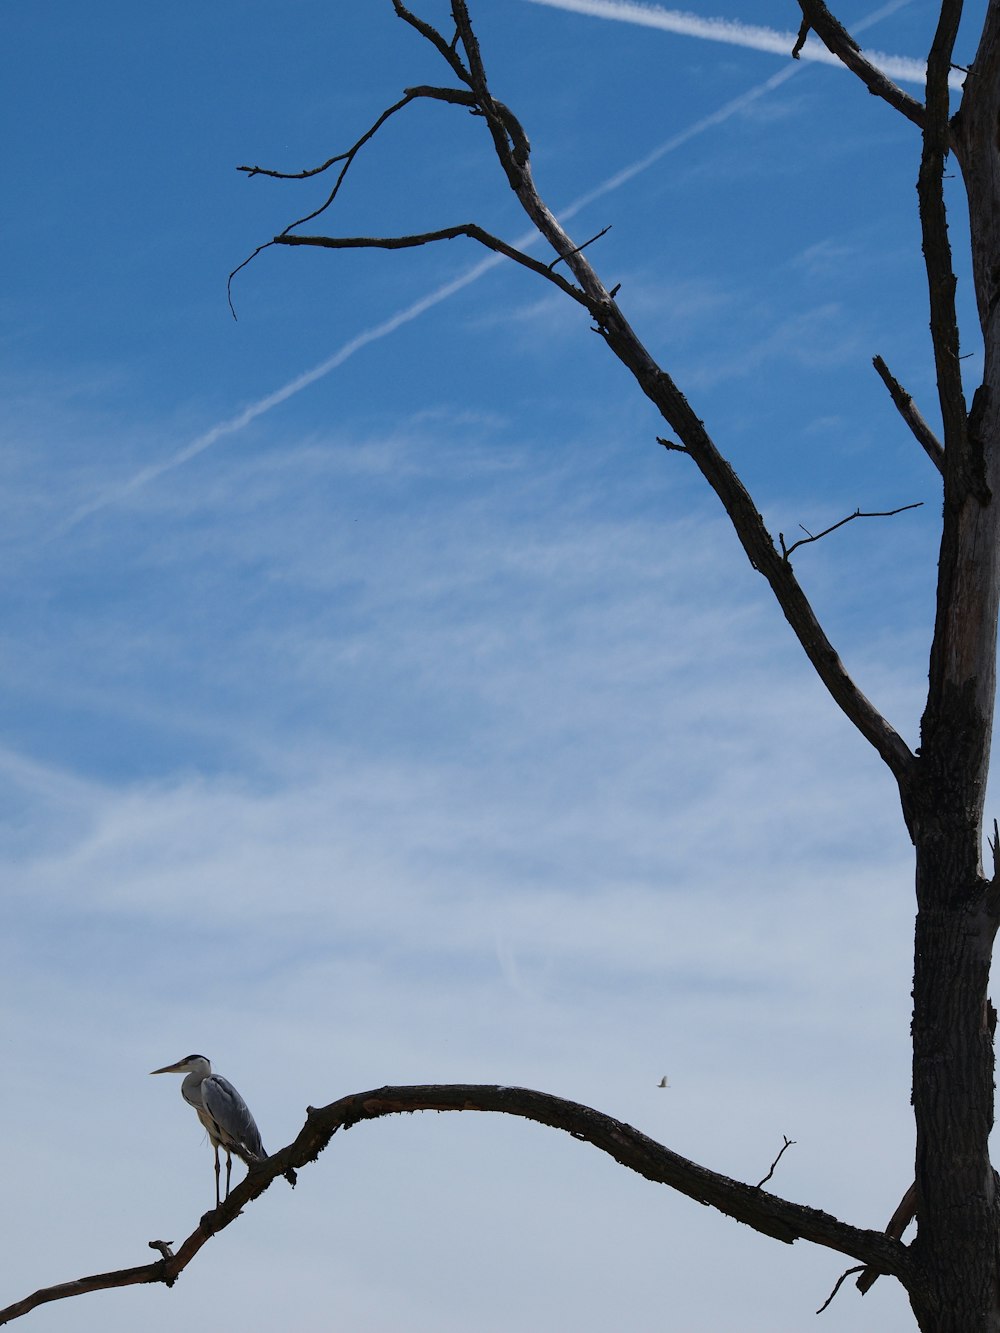 brown long-beaked bird on tree branch